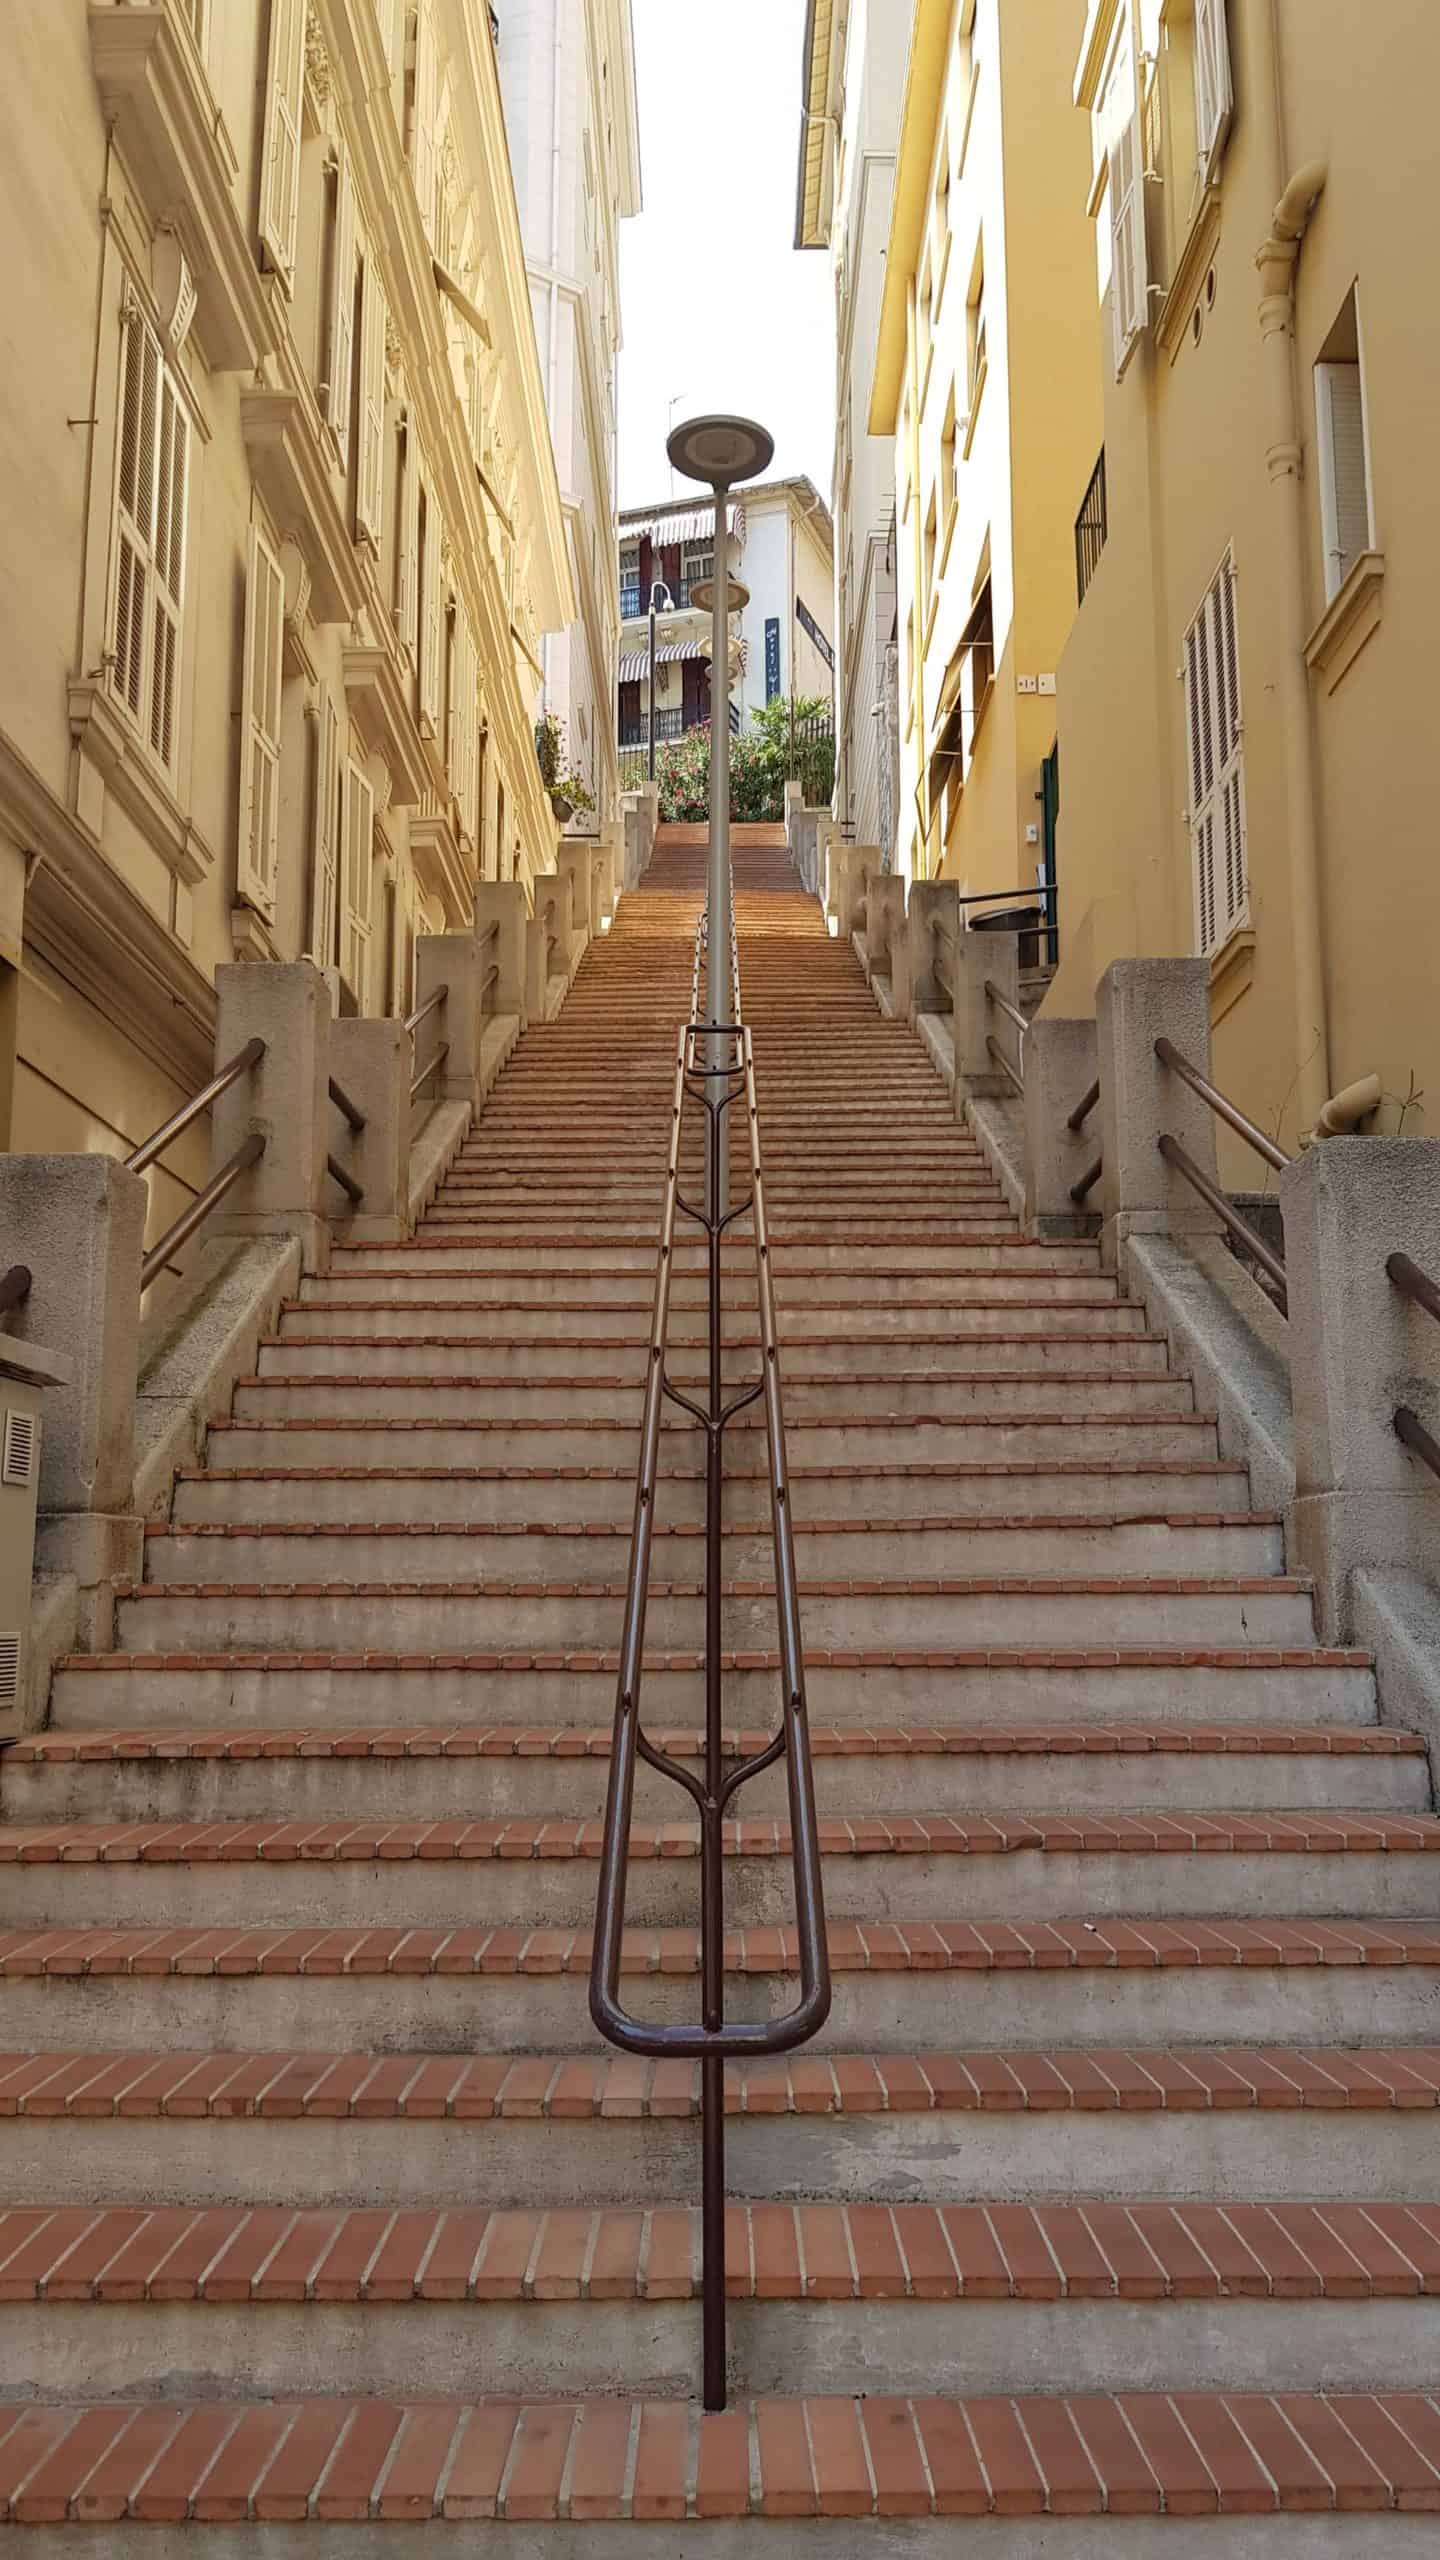 Best things to do in Monaco - AJ Saunders - Monaco stairs by Lazar Gugleta on Unsplash